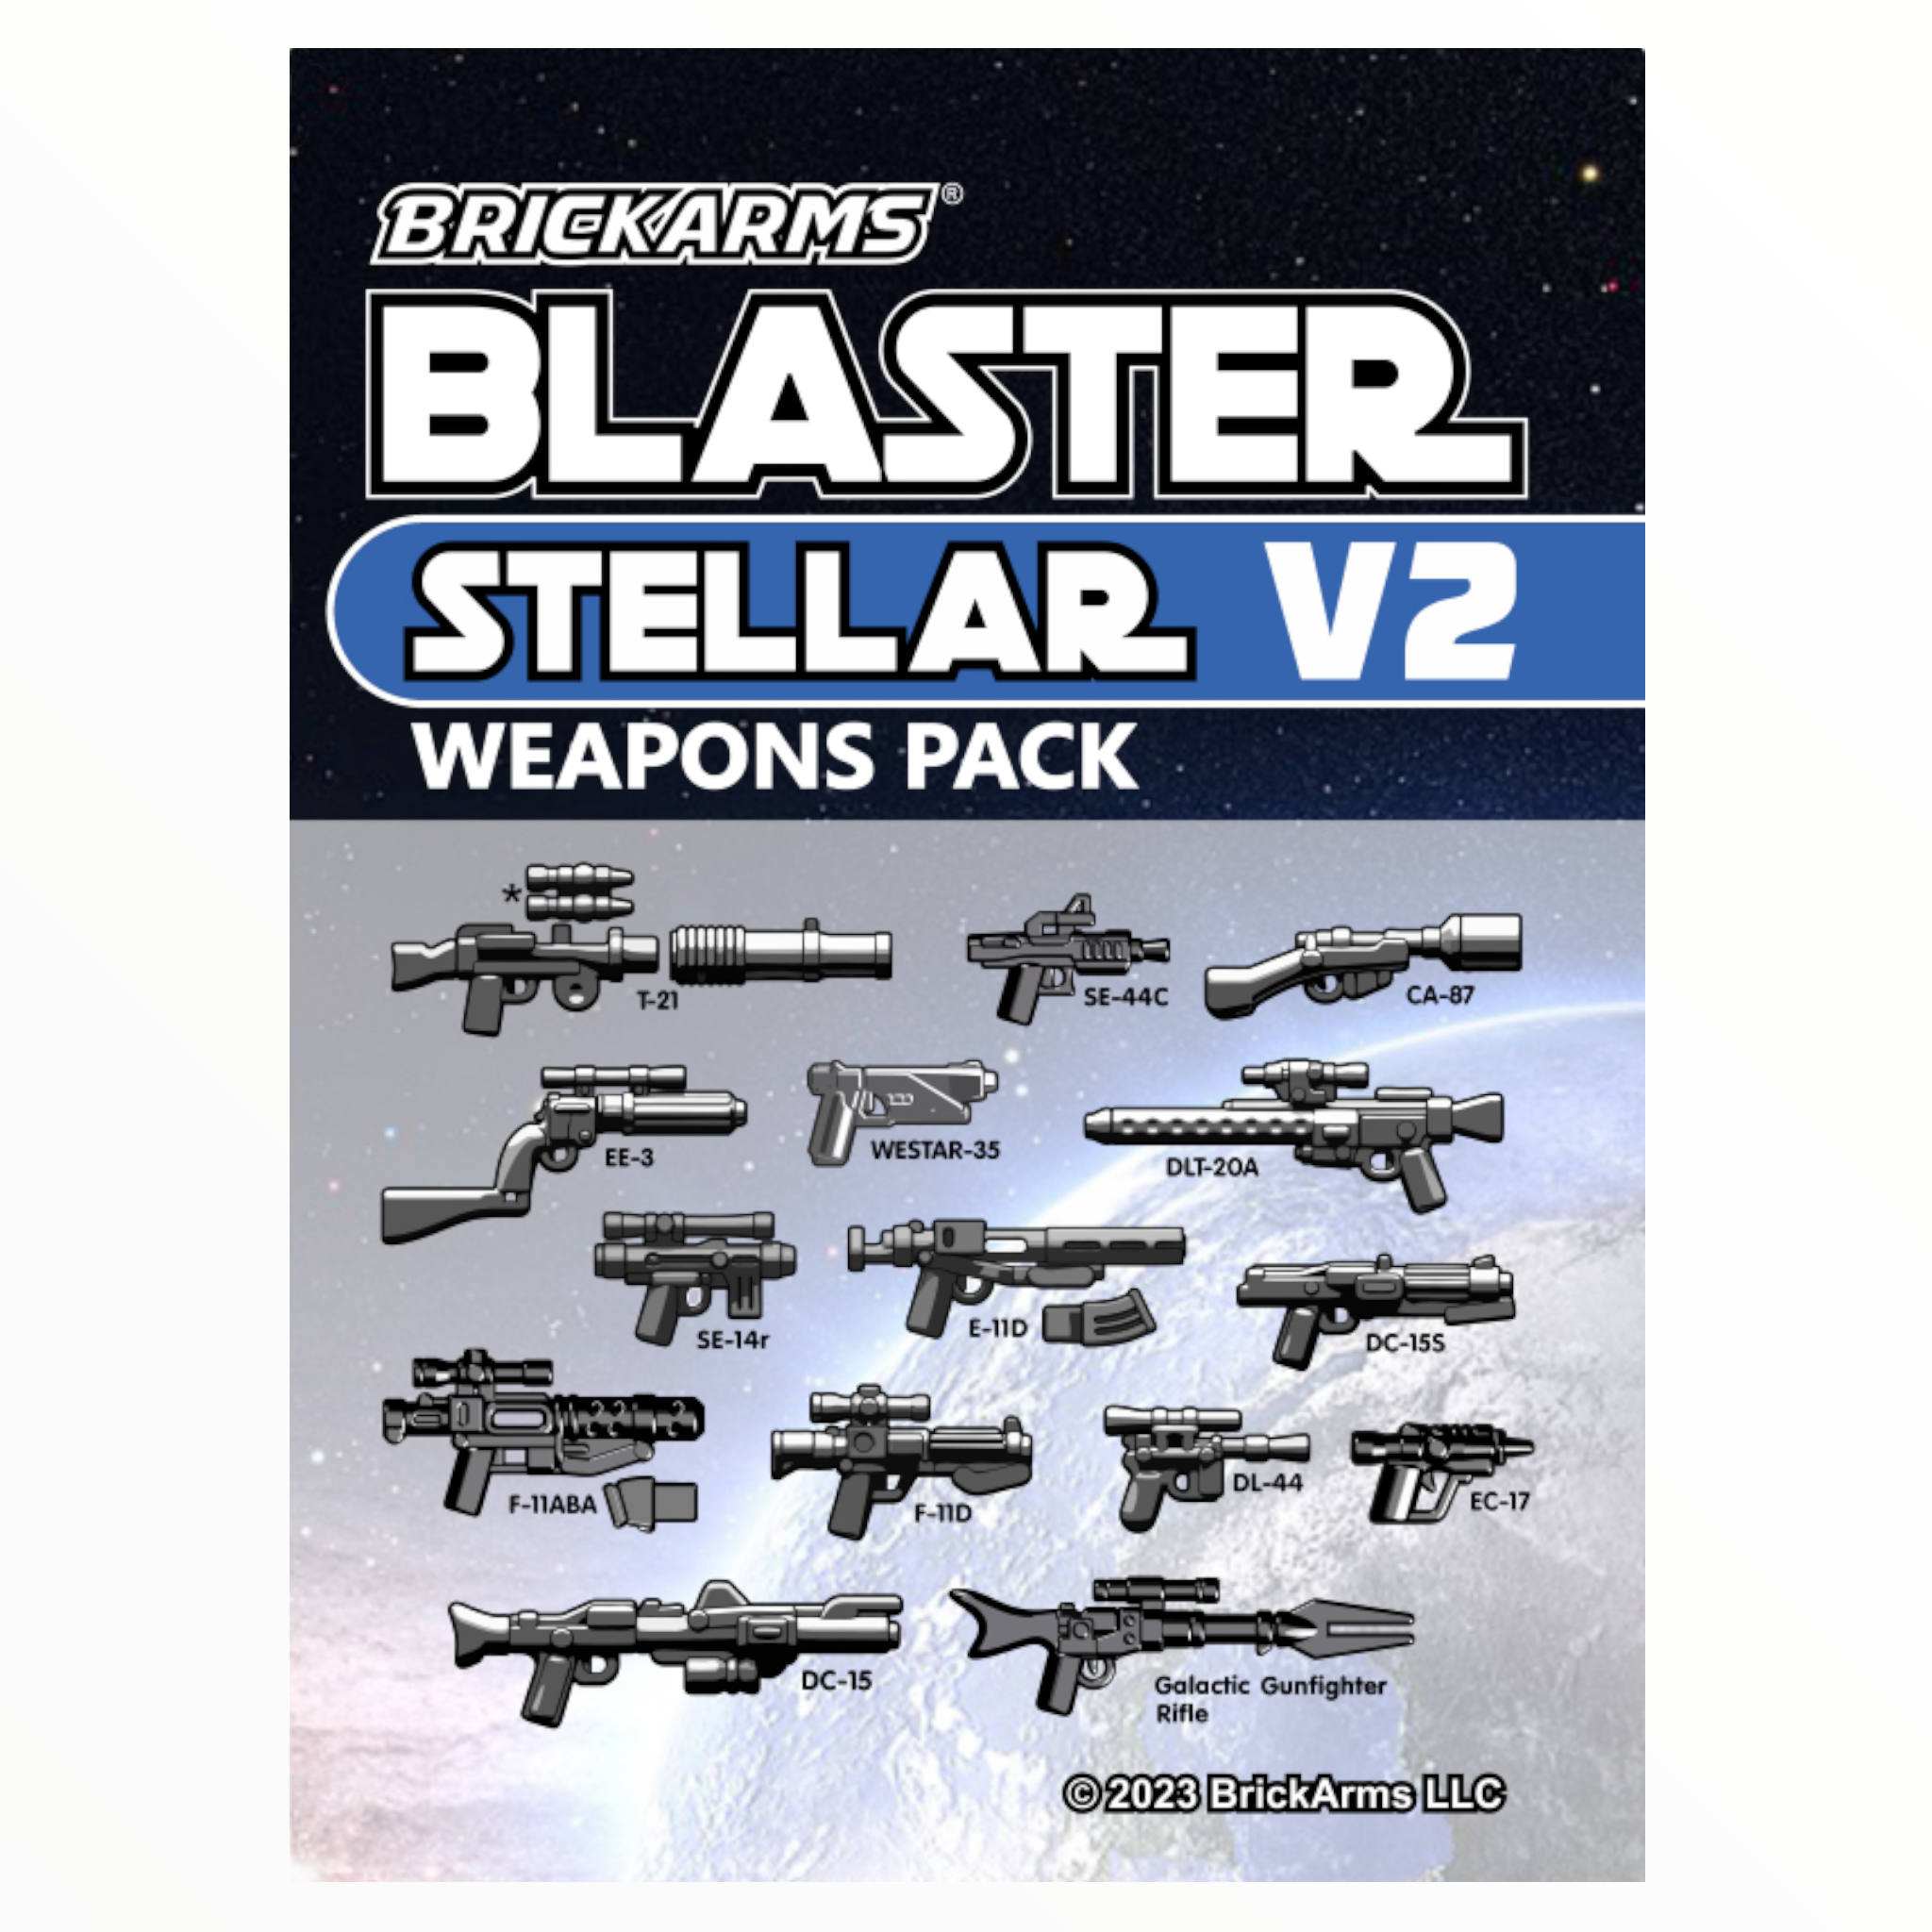 BrickArms Blaster Weapons Pack - Stellar V2